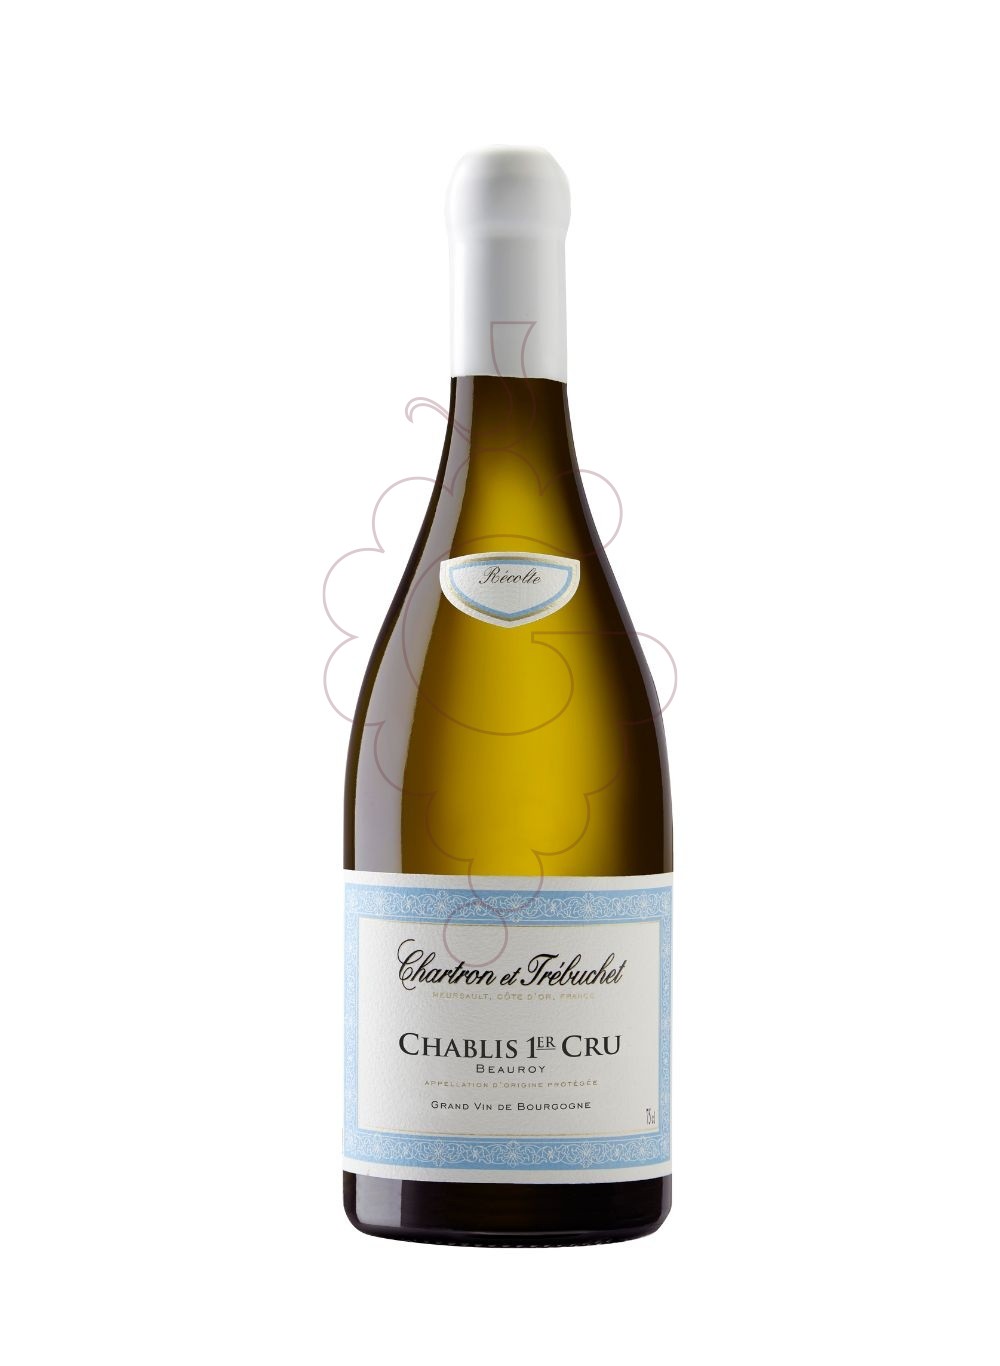 Foto Chartron et Trebuchet Chablis 1er Cru Beauroy vino blanco